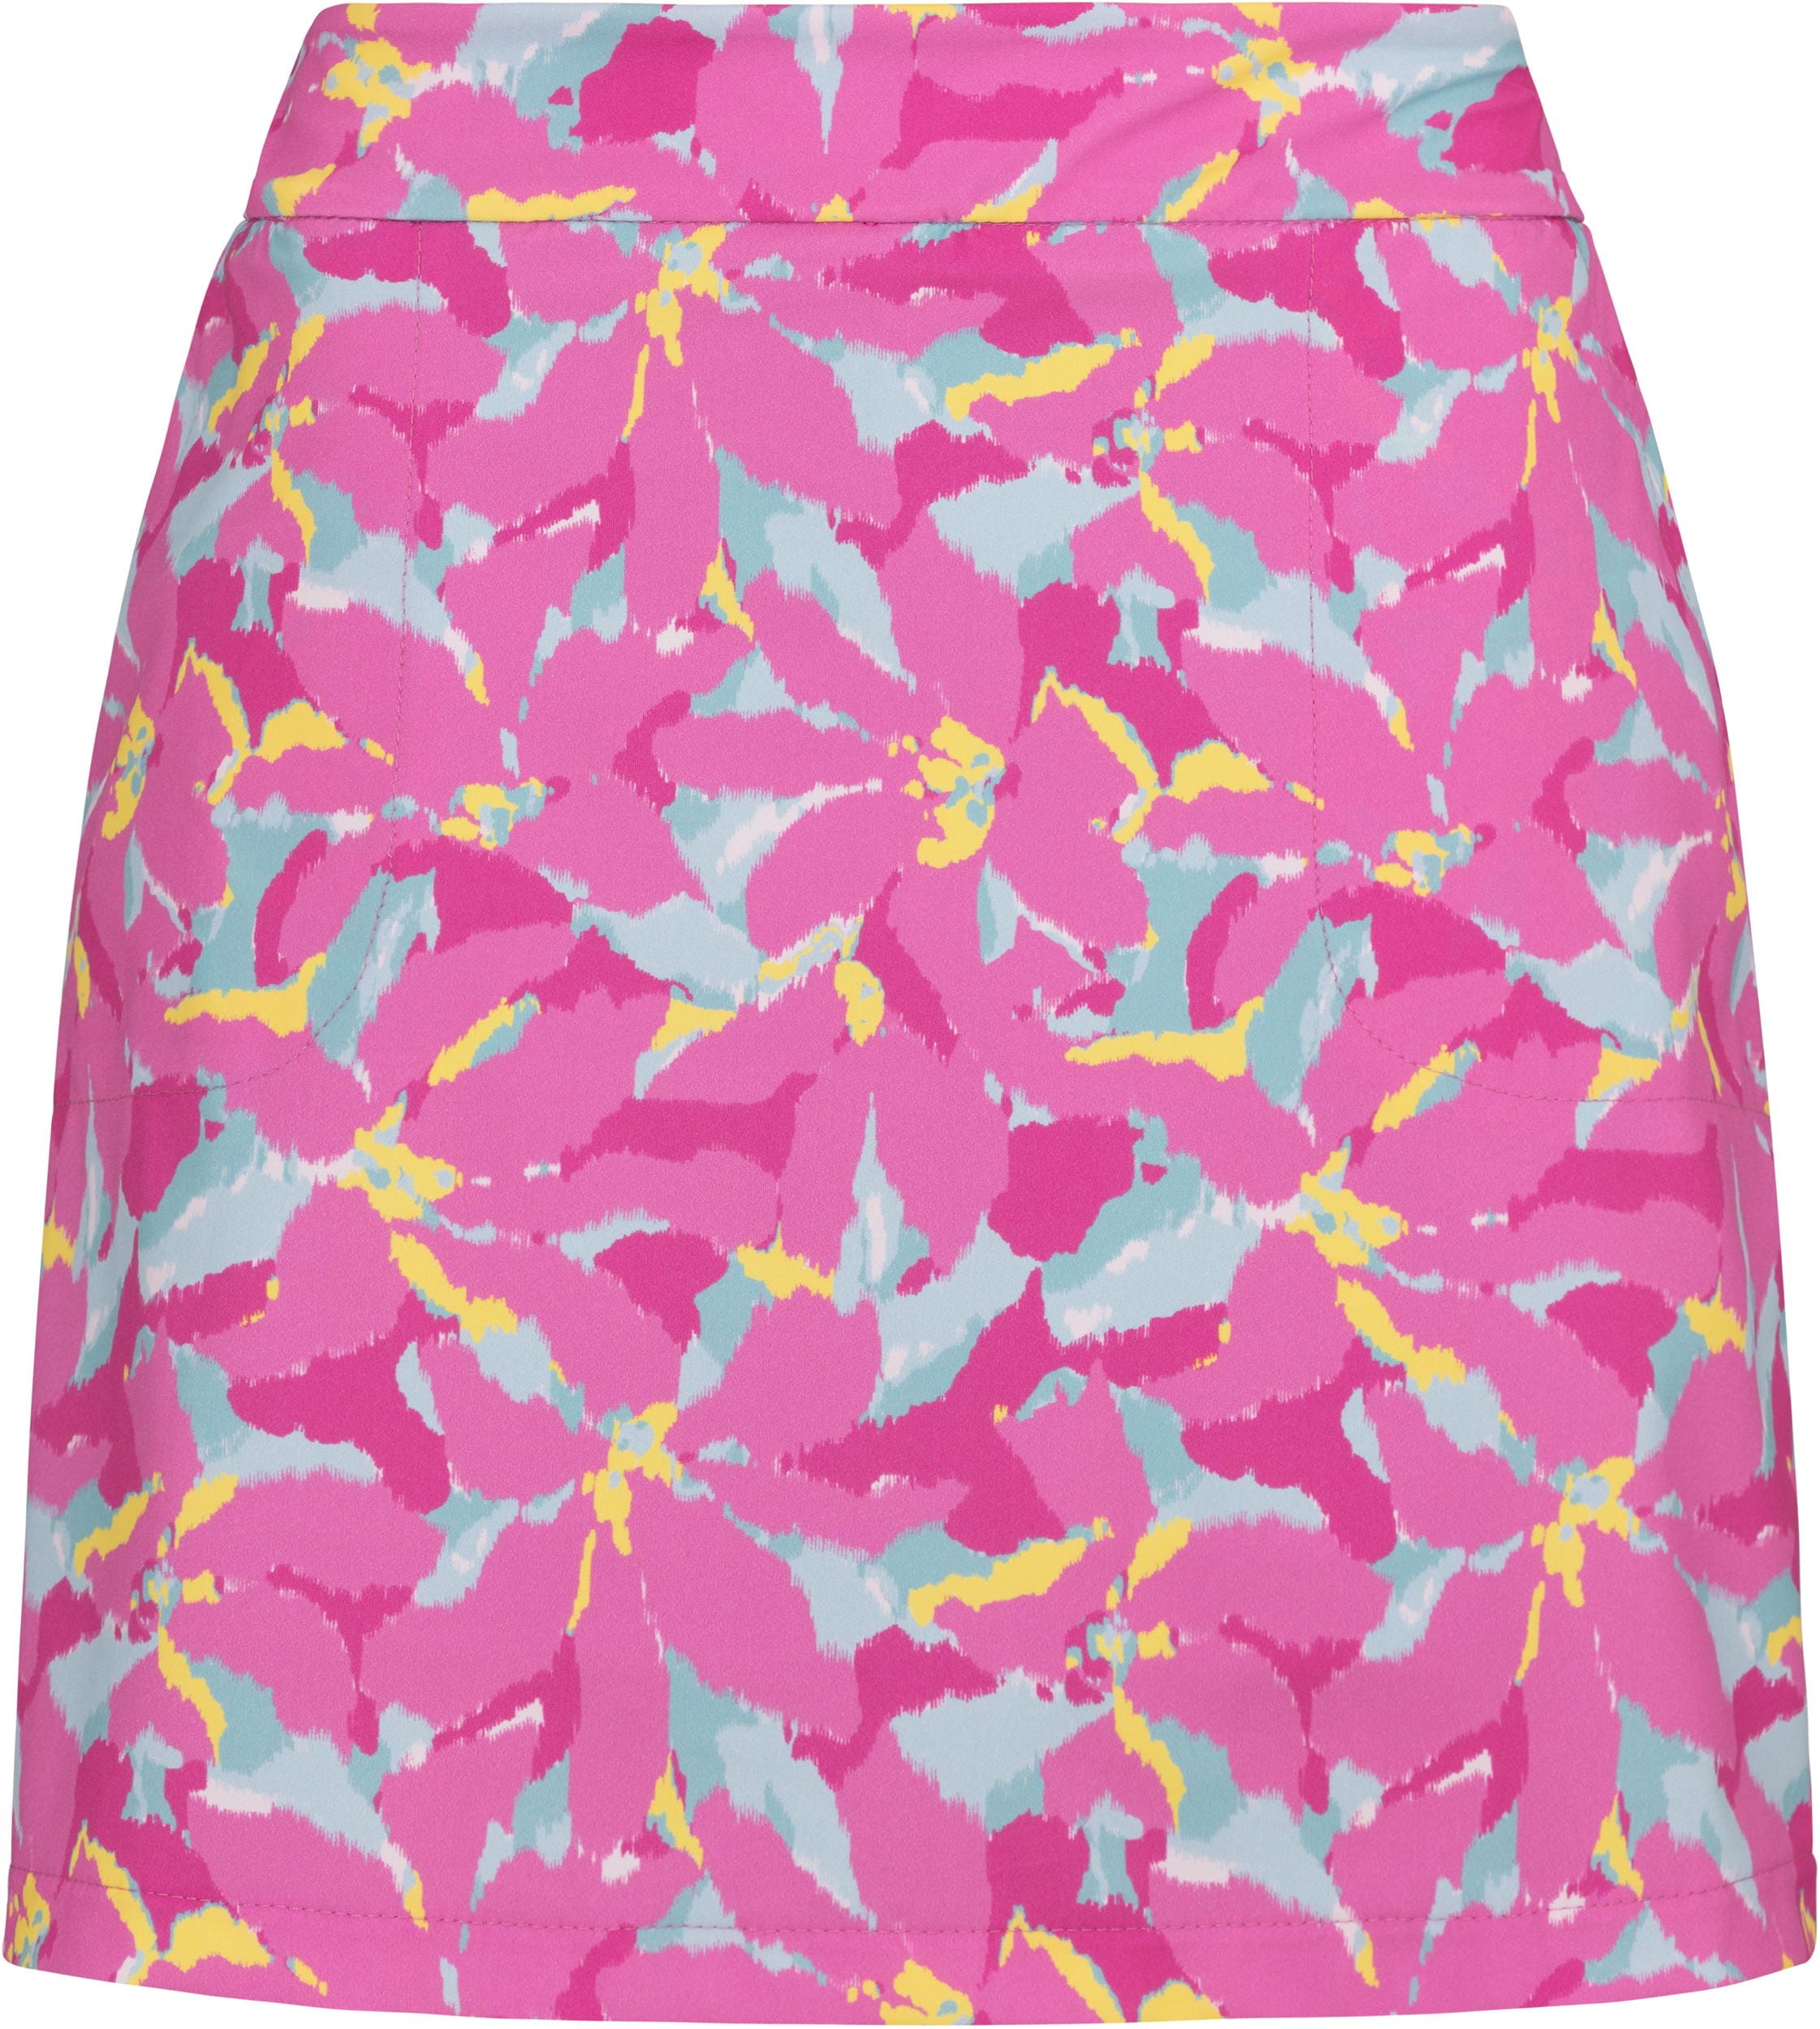 Alberto LISSY Jersey Summer Print Skirt, aqua/pink